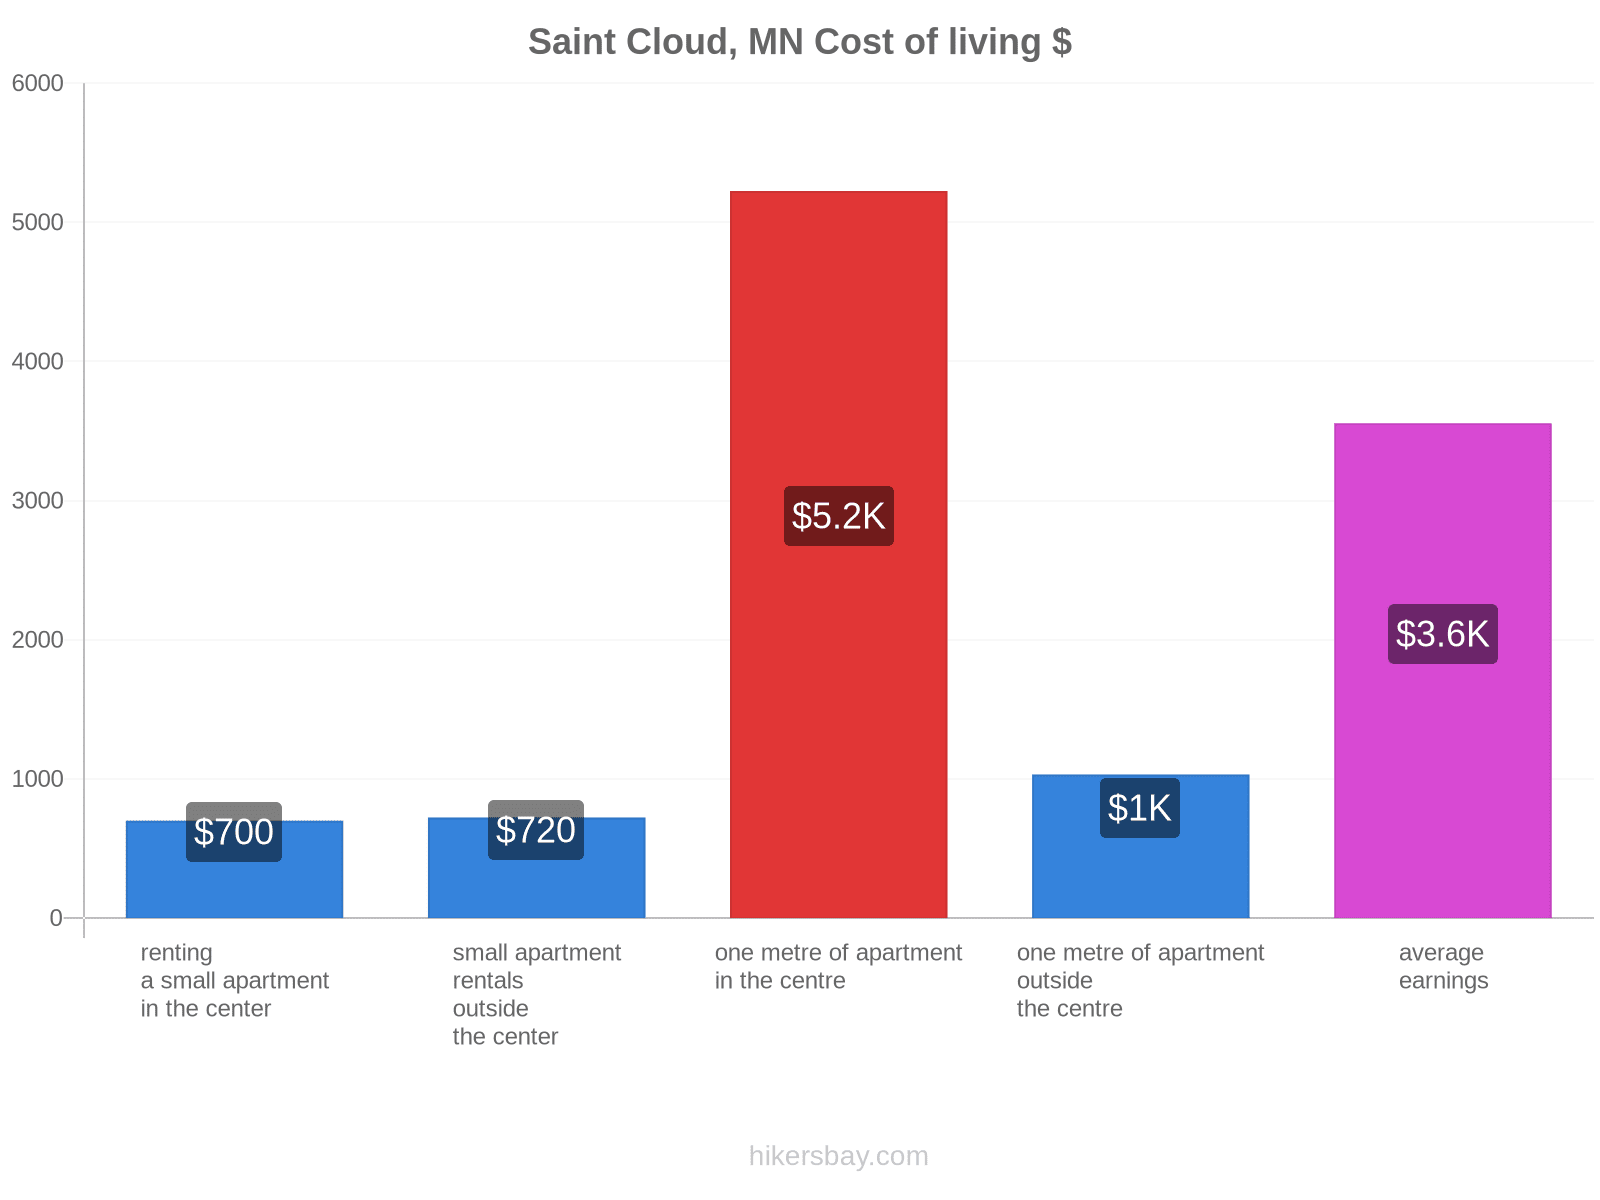 Saint Cloud, MN cost of living hikersbay.com